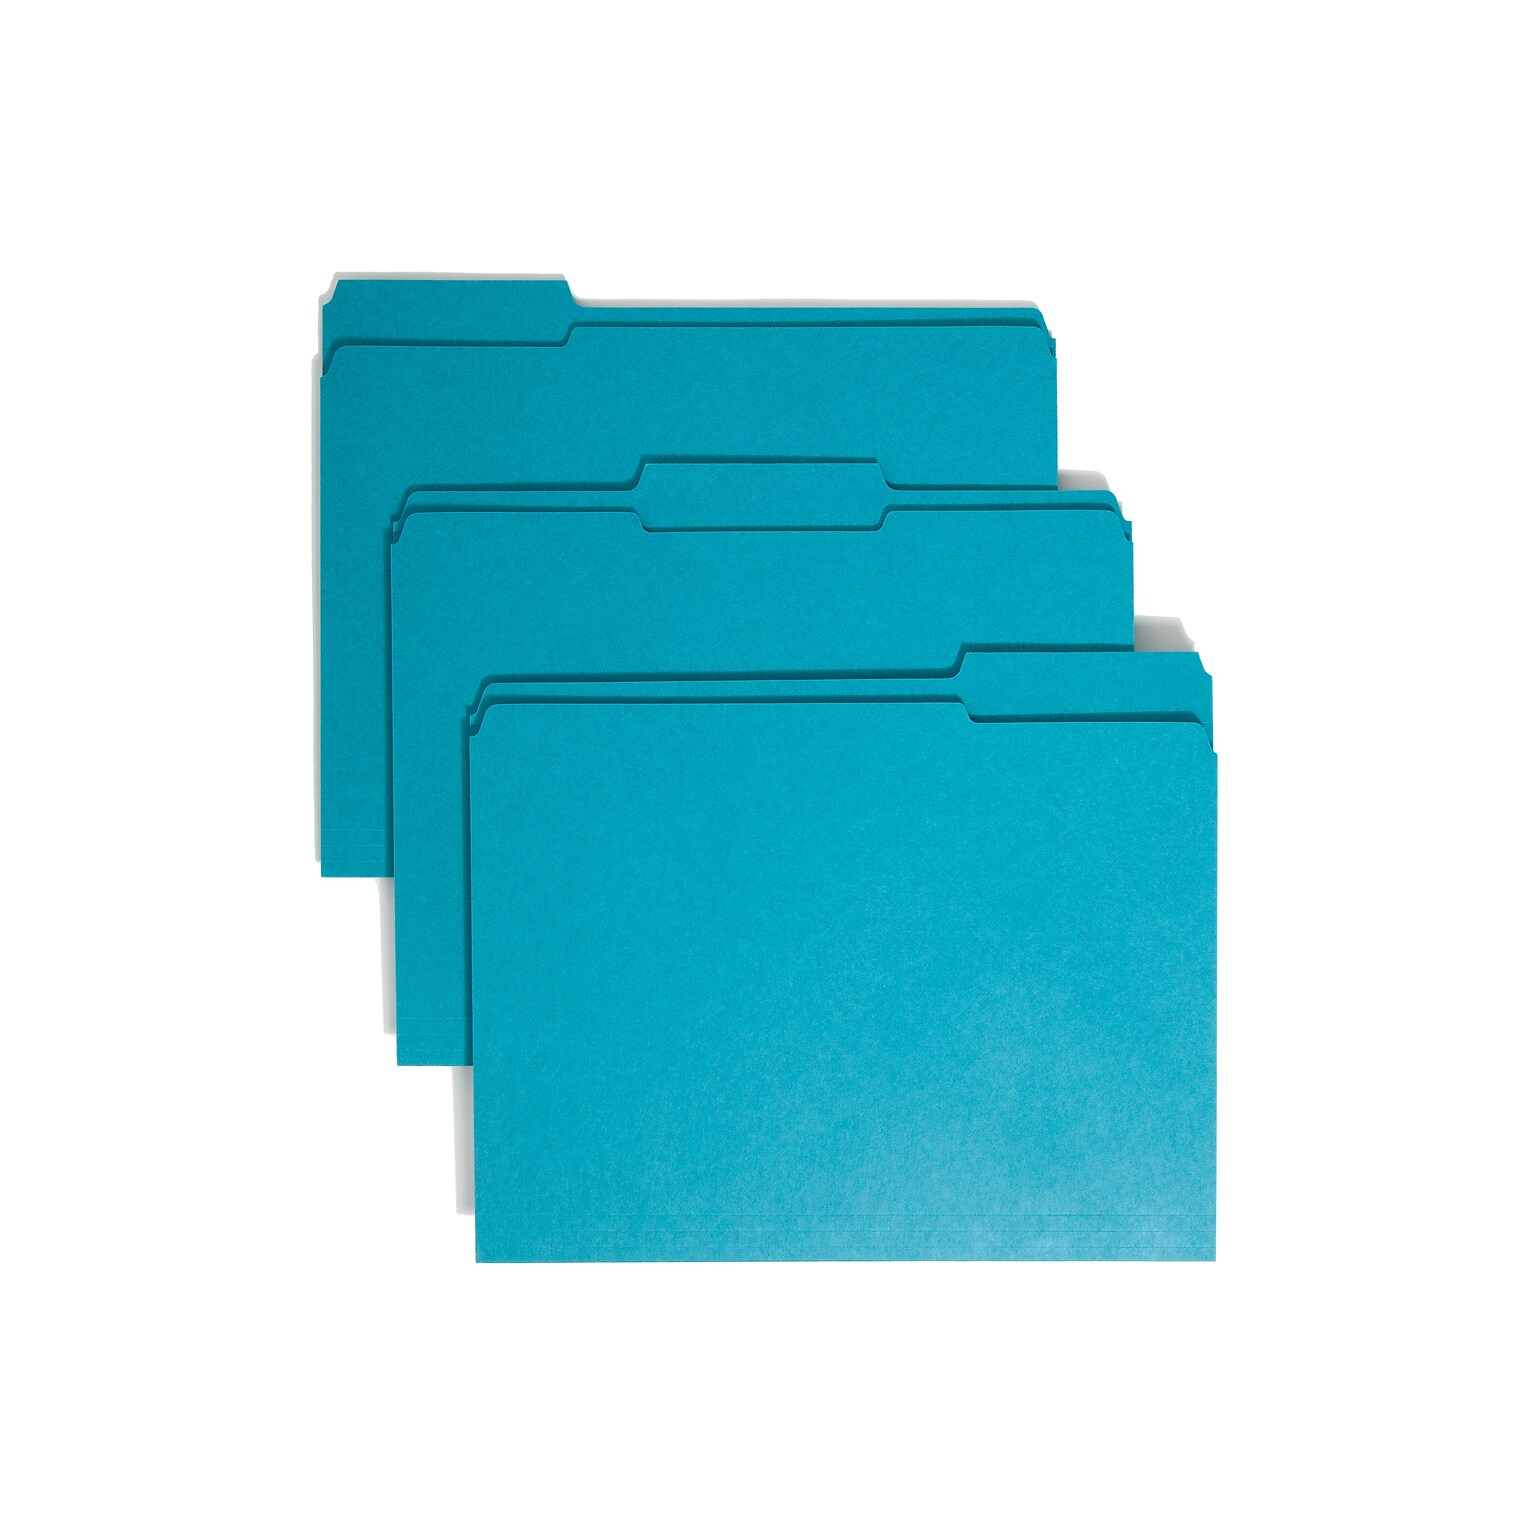 Smead File Folder, 3 Tab, Letter Size, Teal, 100/Box (13134)